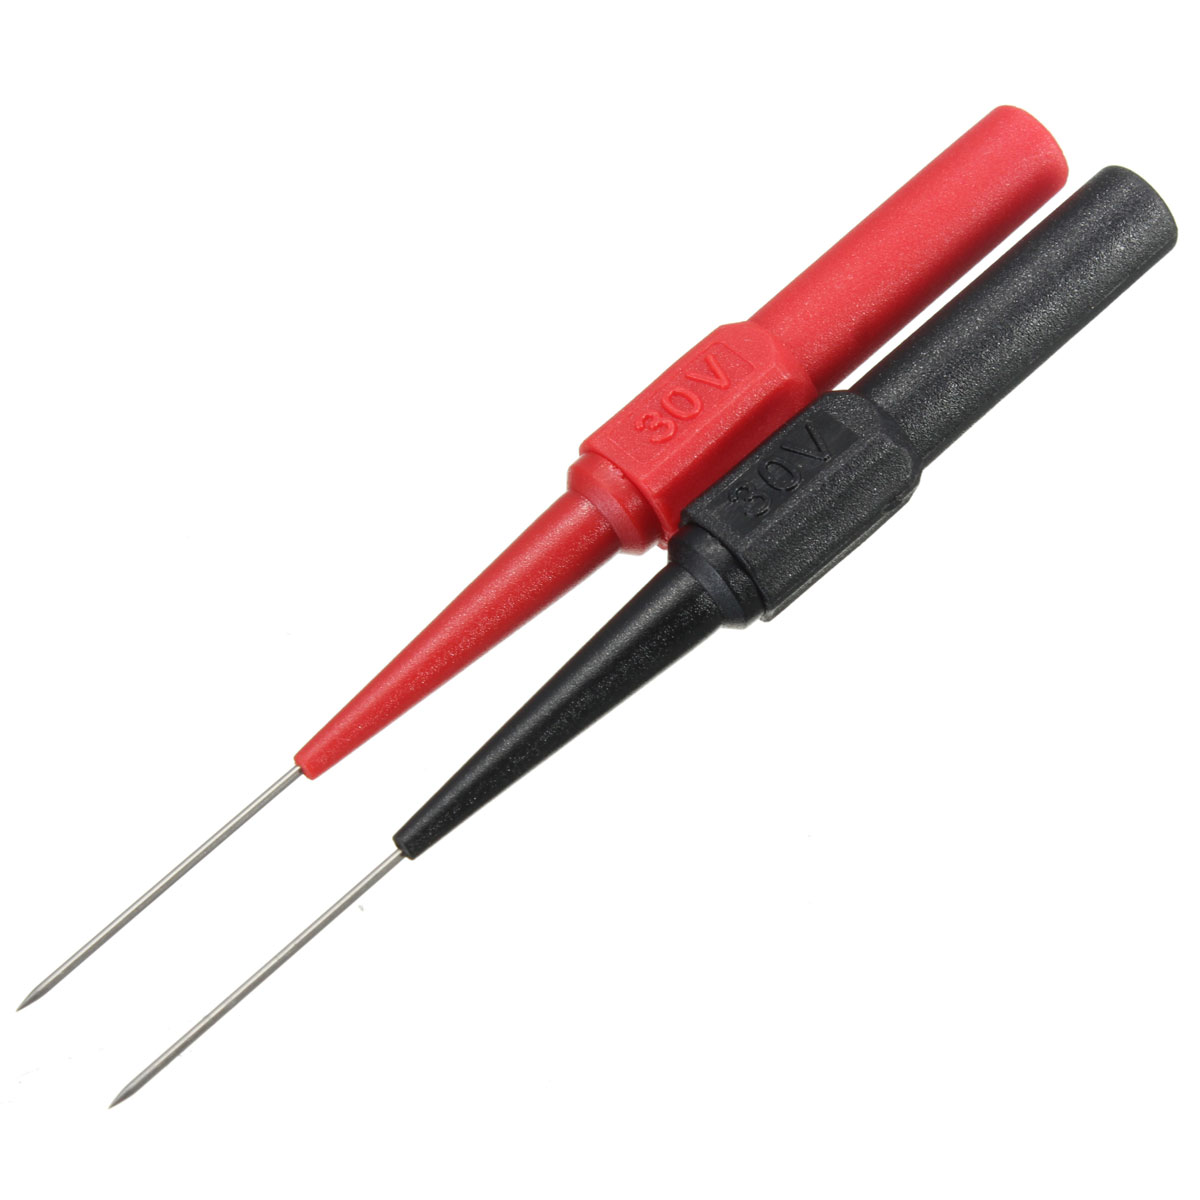 DANIU-Insulation-Piercing-Needle-Non-destructive-Multimeter-Test-Probes-RedBlack-1024378-5